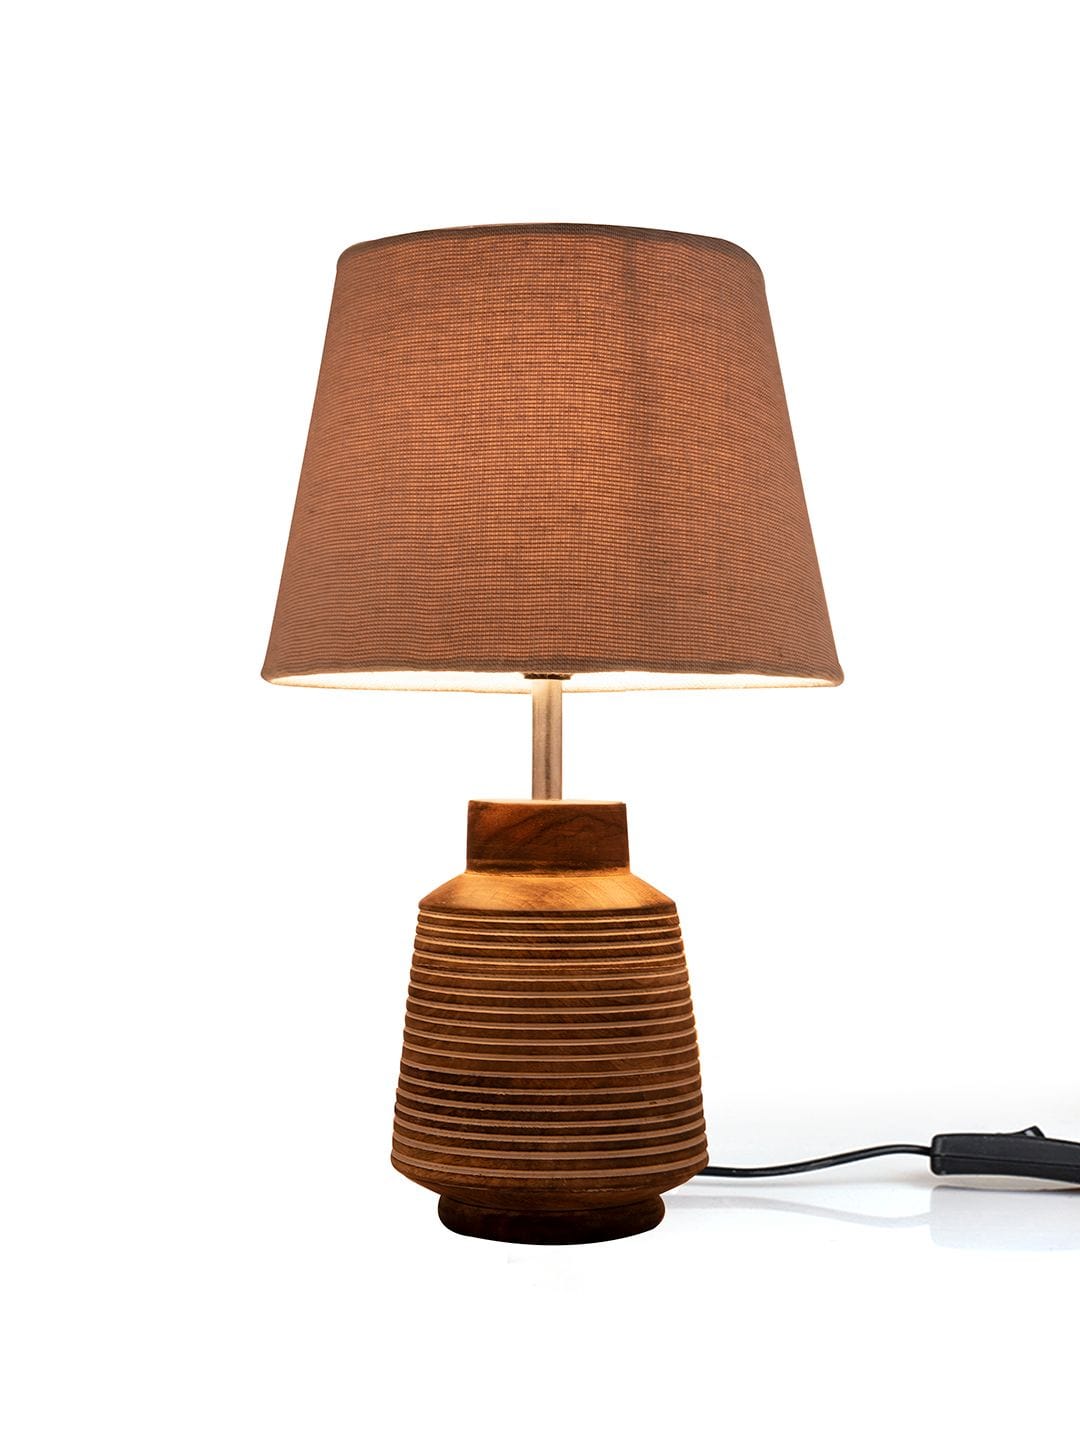 Rustic Ridged Wooden Lamp with Samre Grey Shade